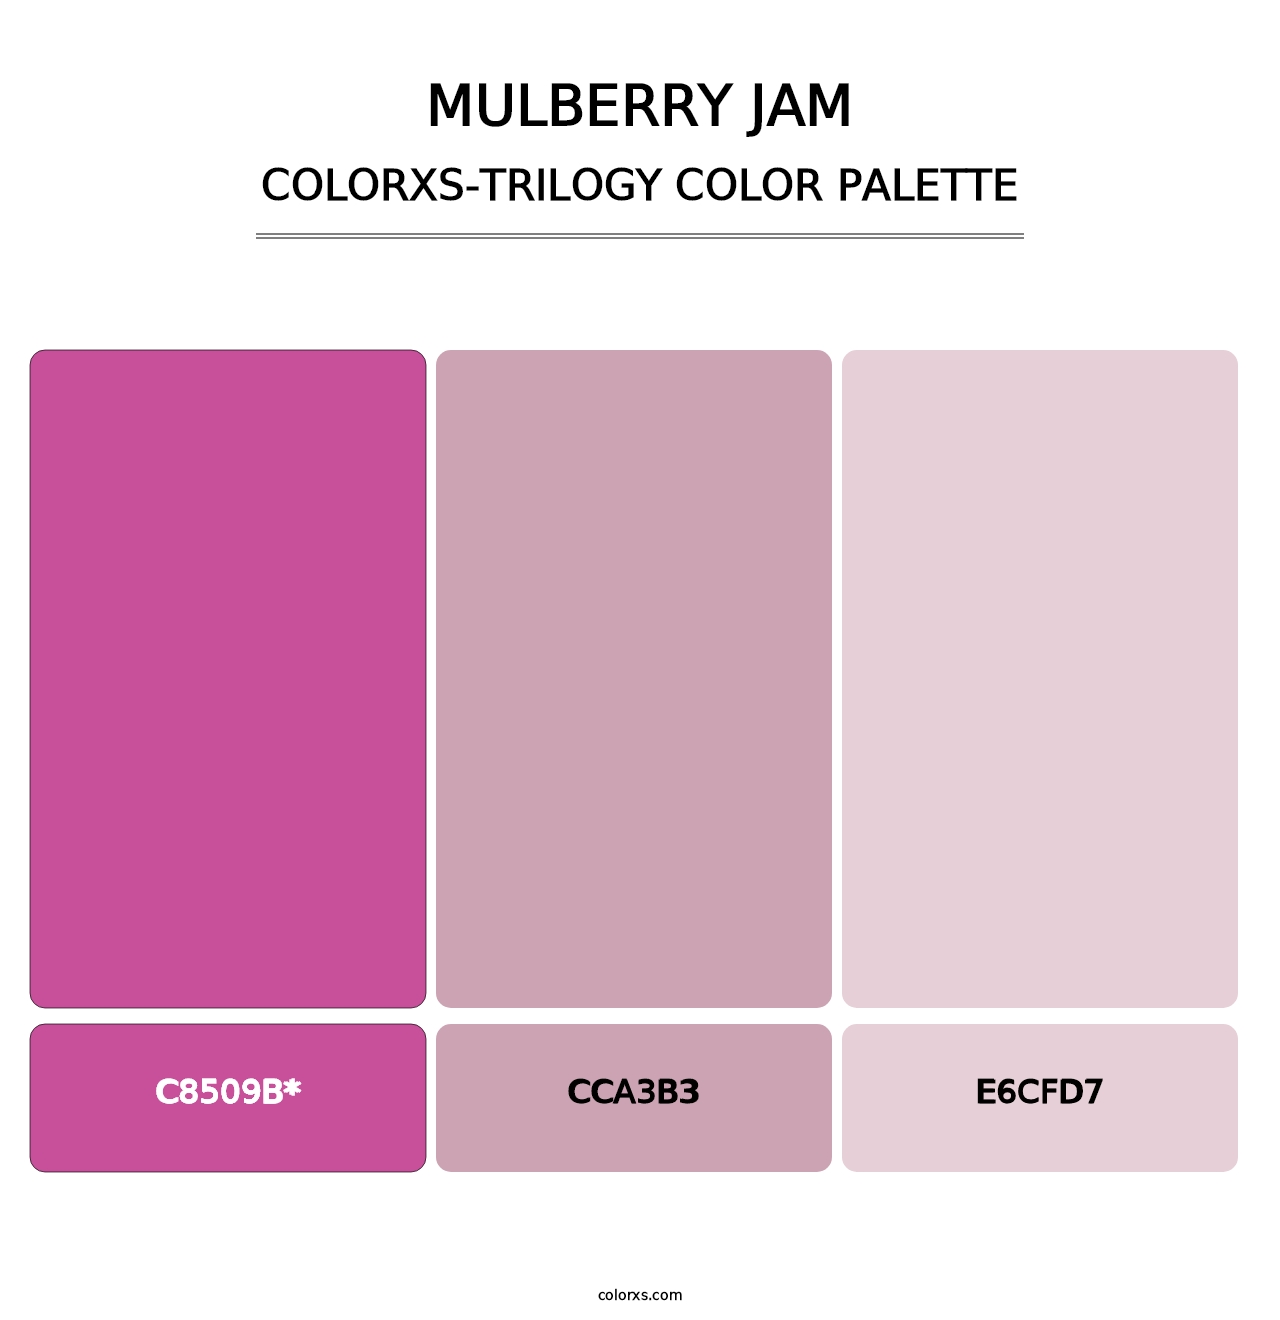 Mulberry Jam - Colorxs Trilogy Palette